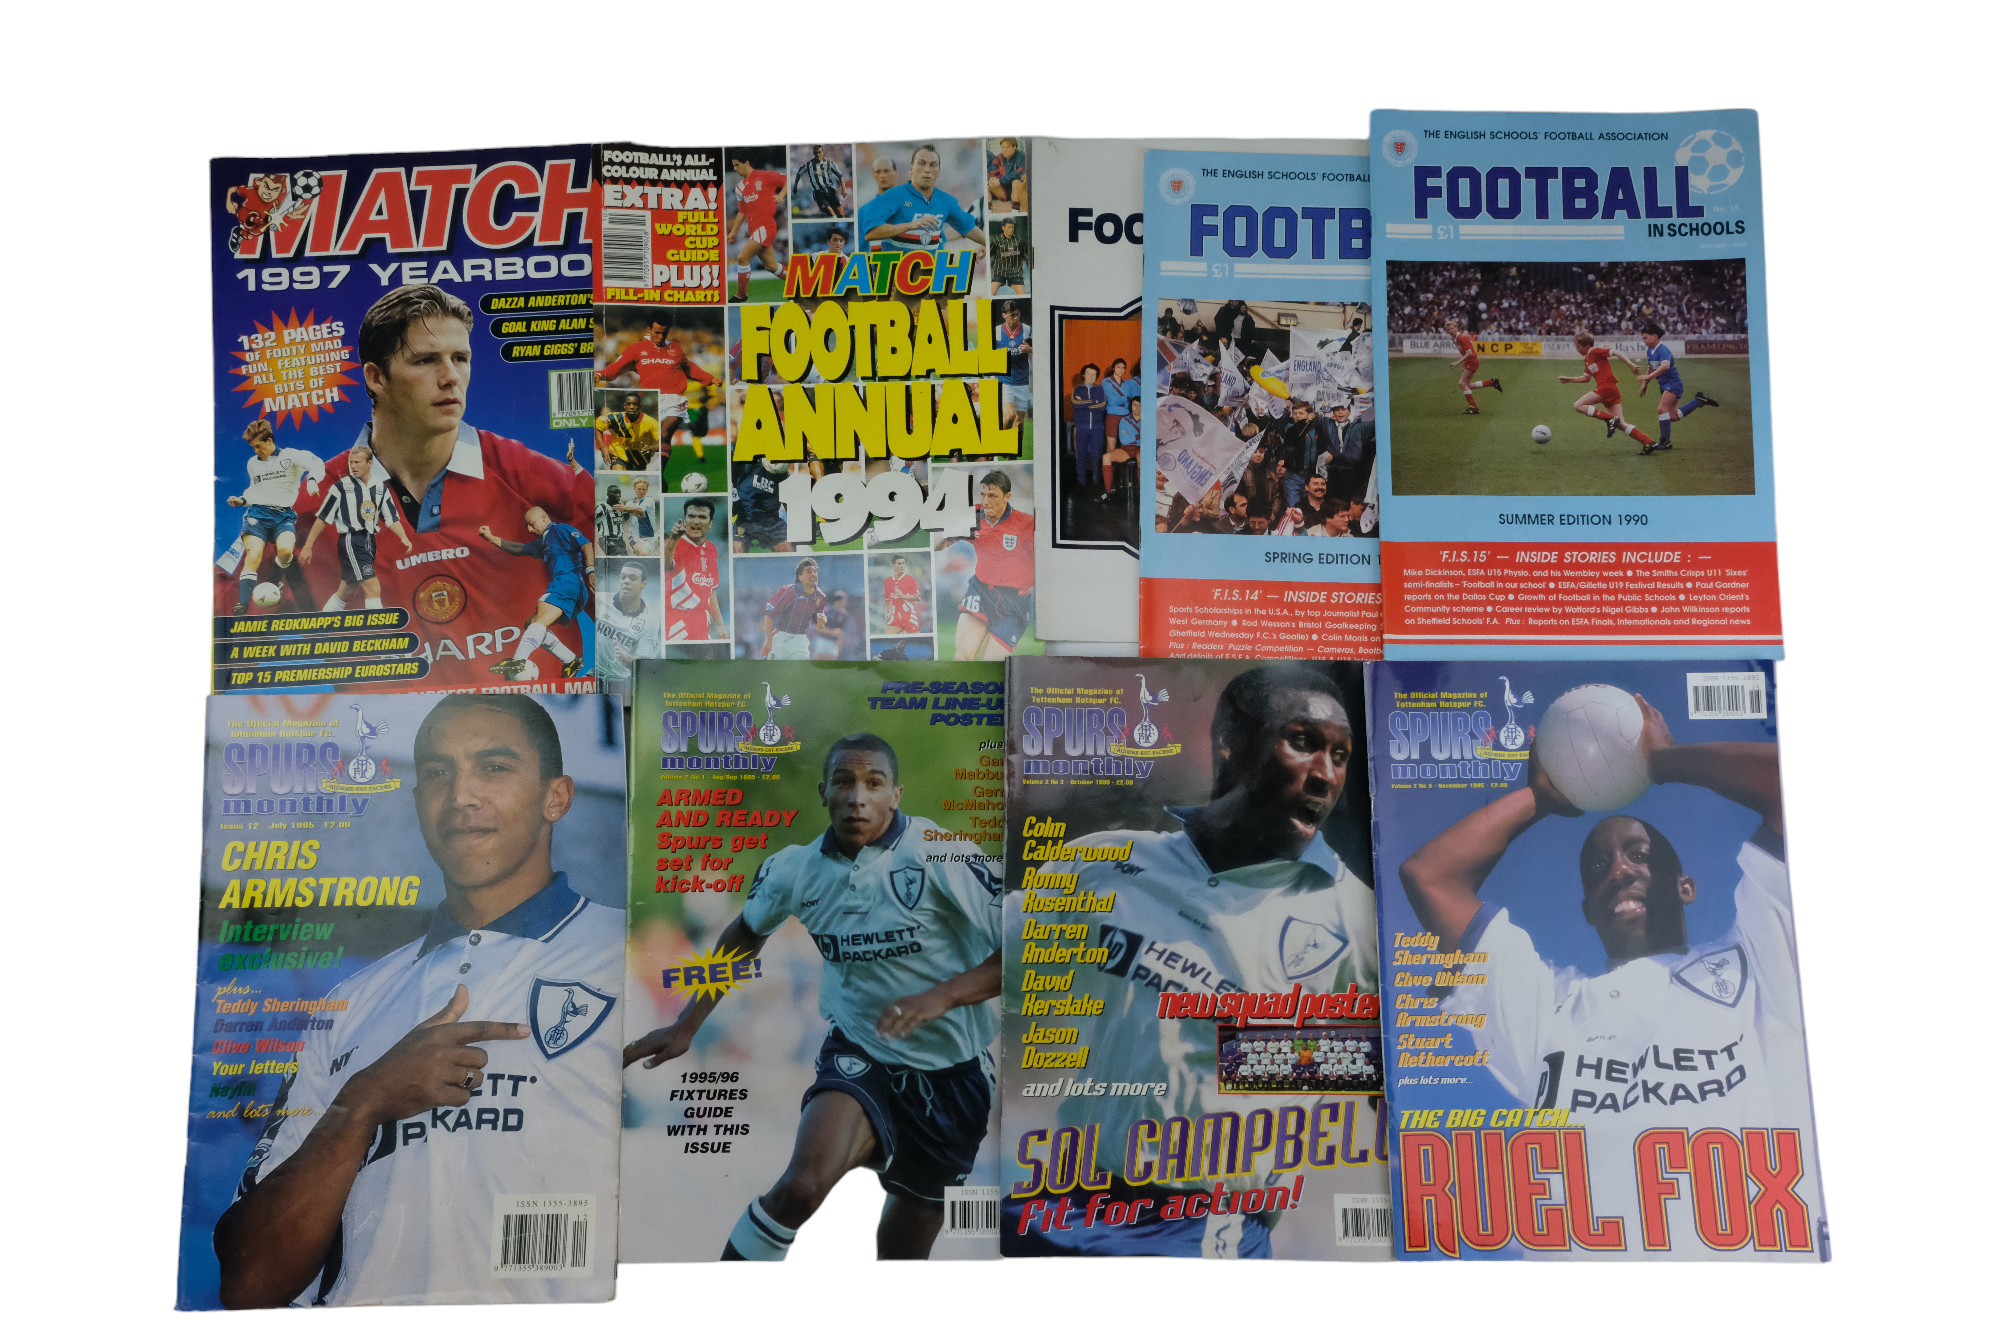 A quantity of football books etc, including Wayne Rooney "My Story so Far", Tottenham Hotspur - Image 7 of 7